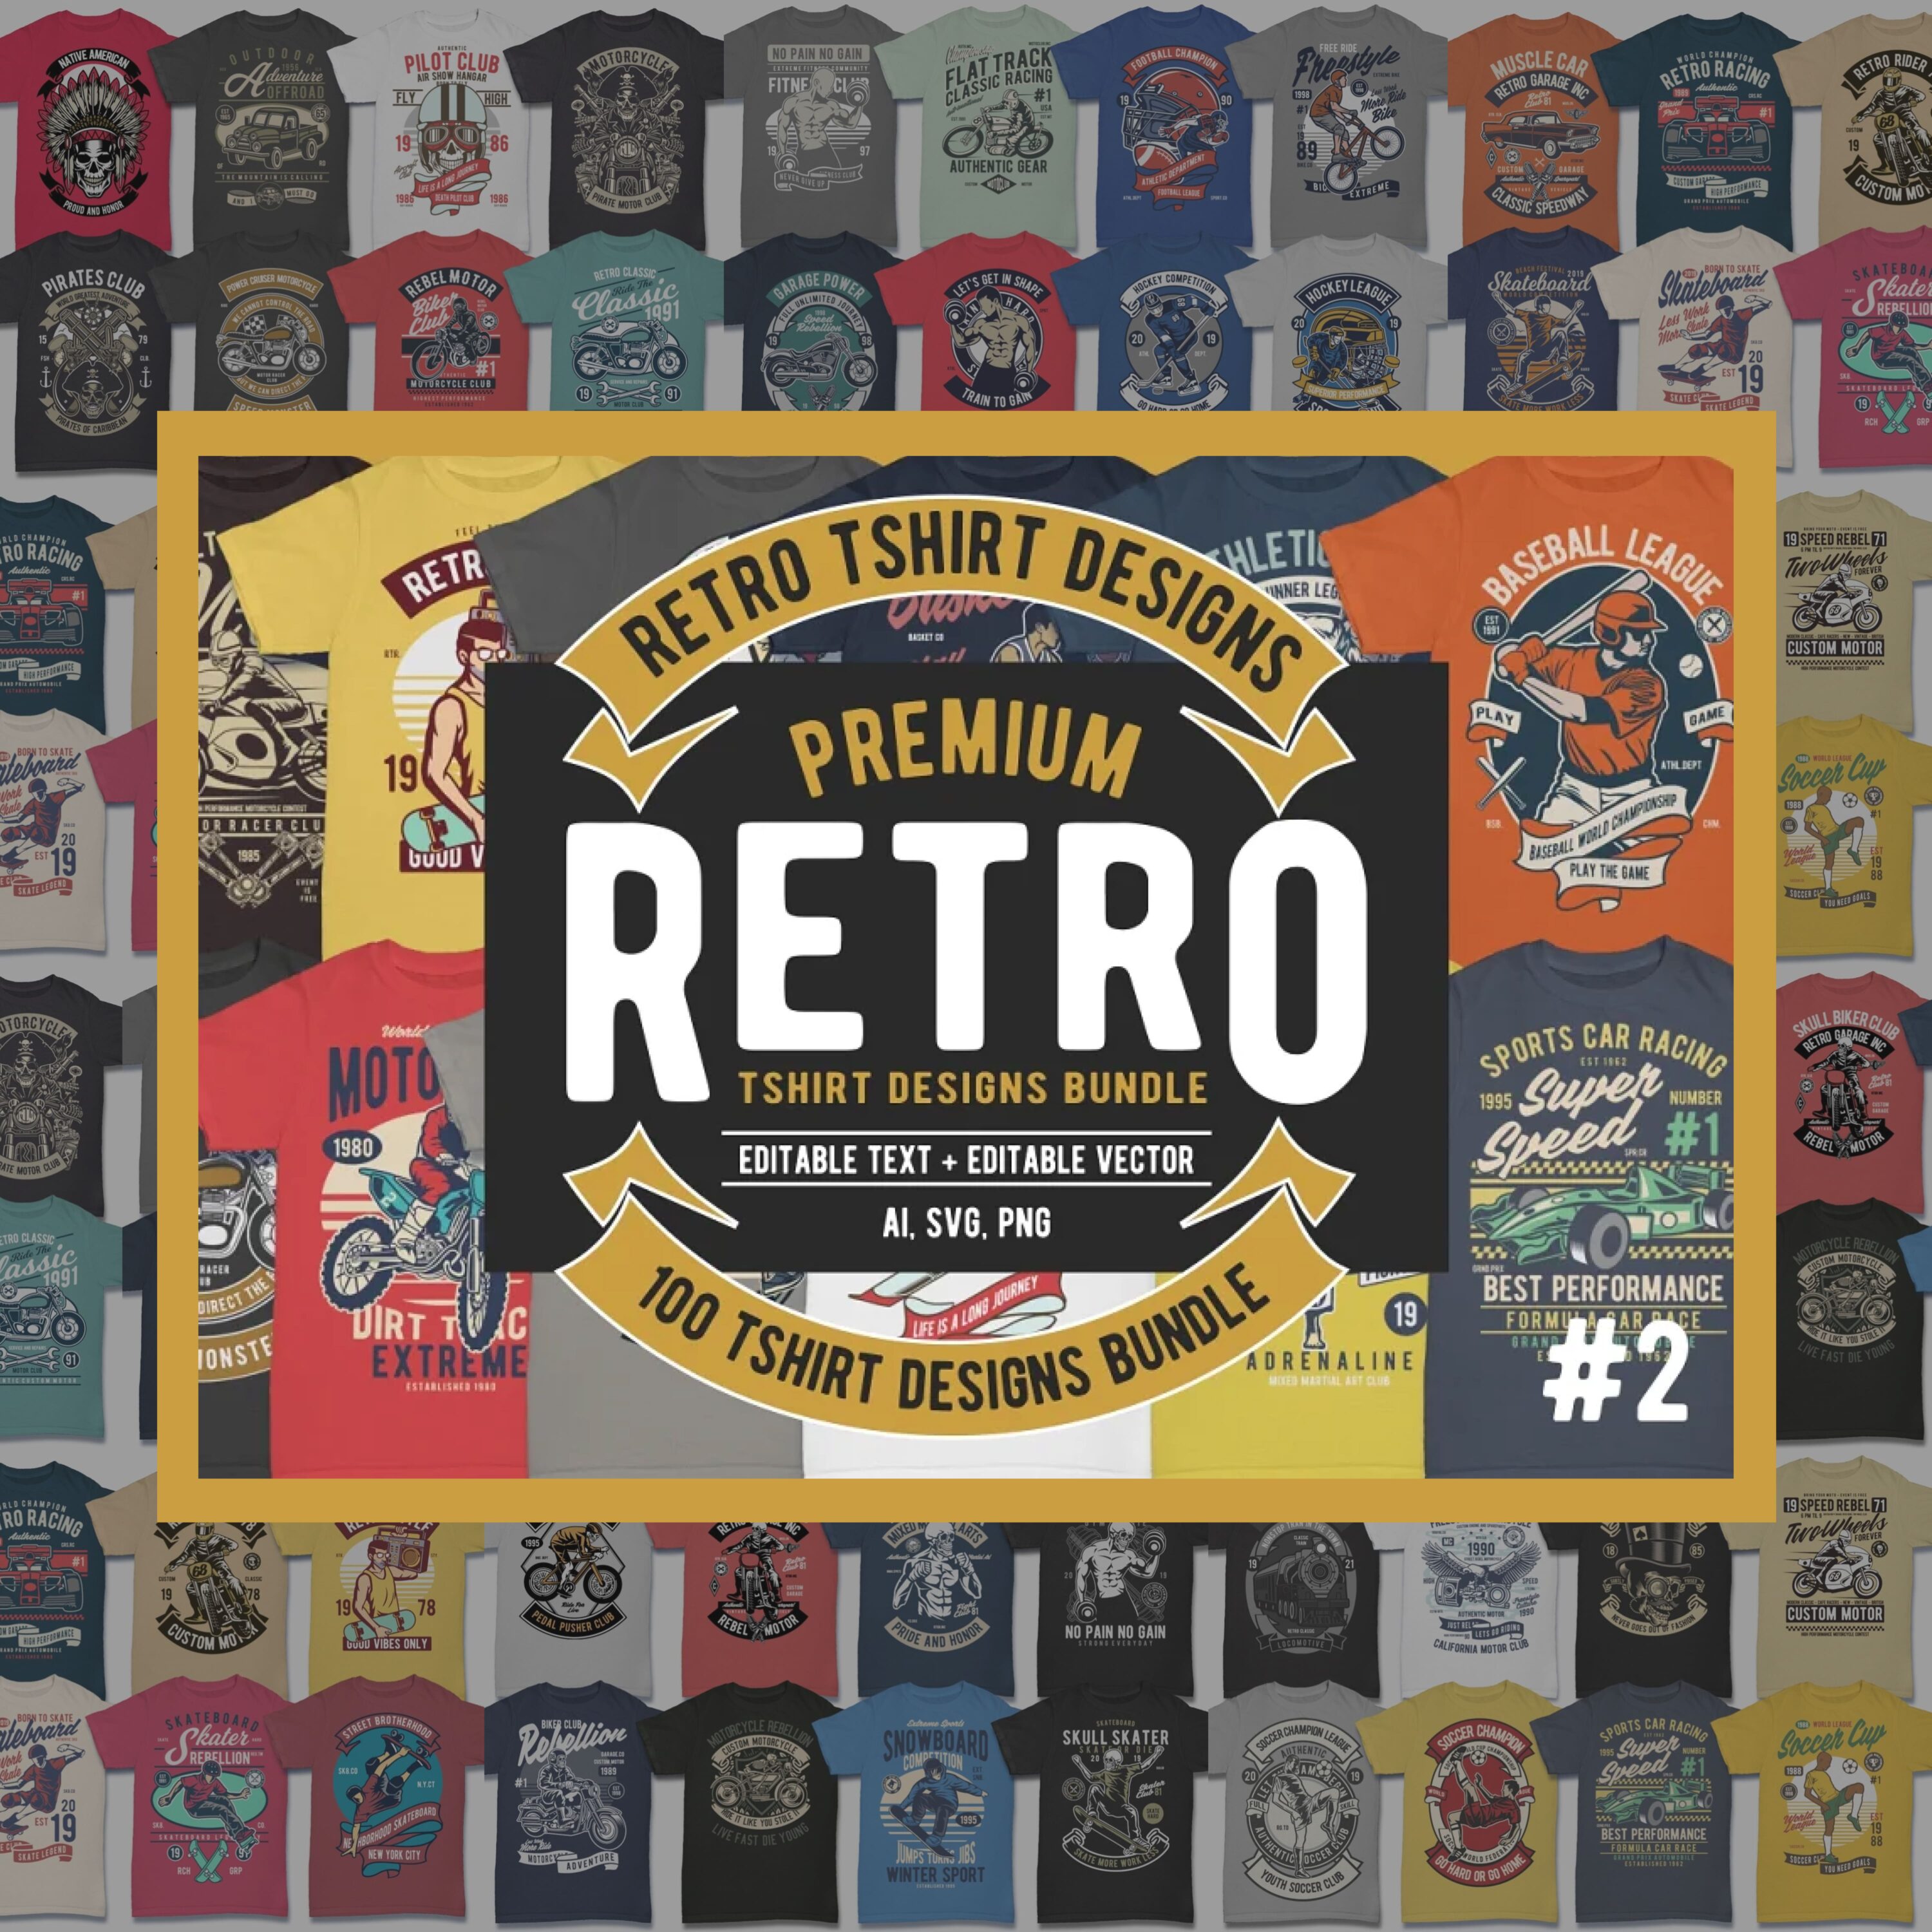 100 Retro Tshirt Designs Bundle #2 cover image.